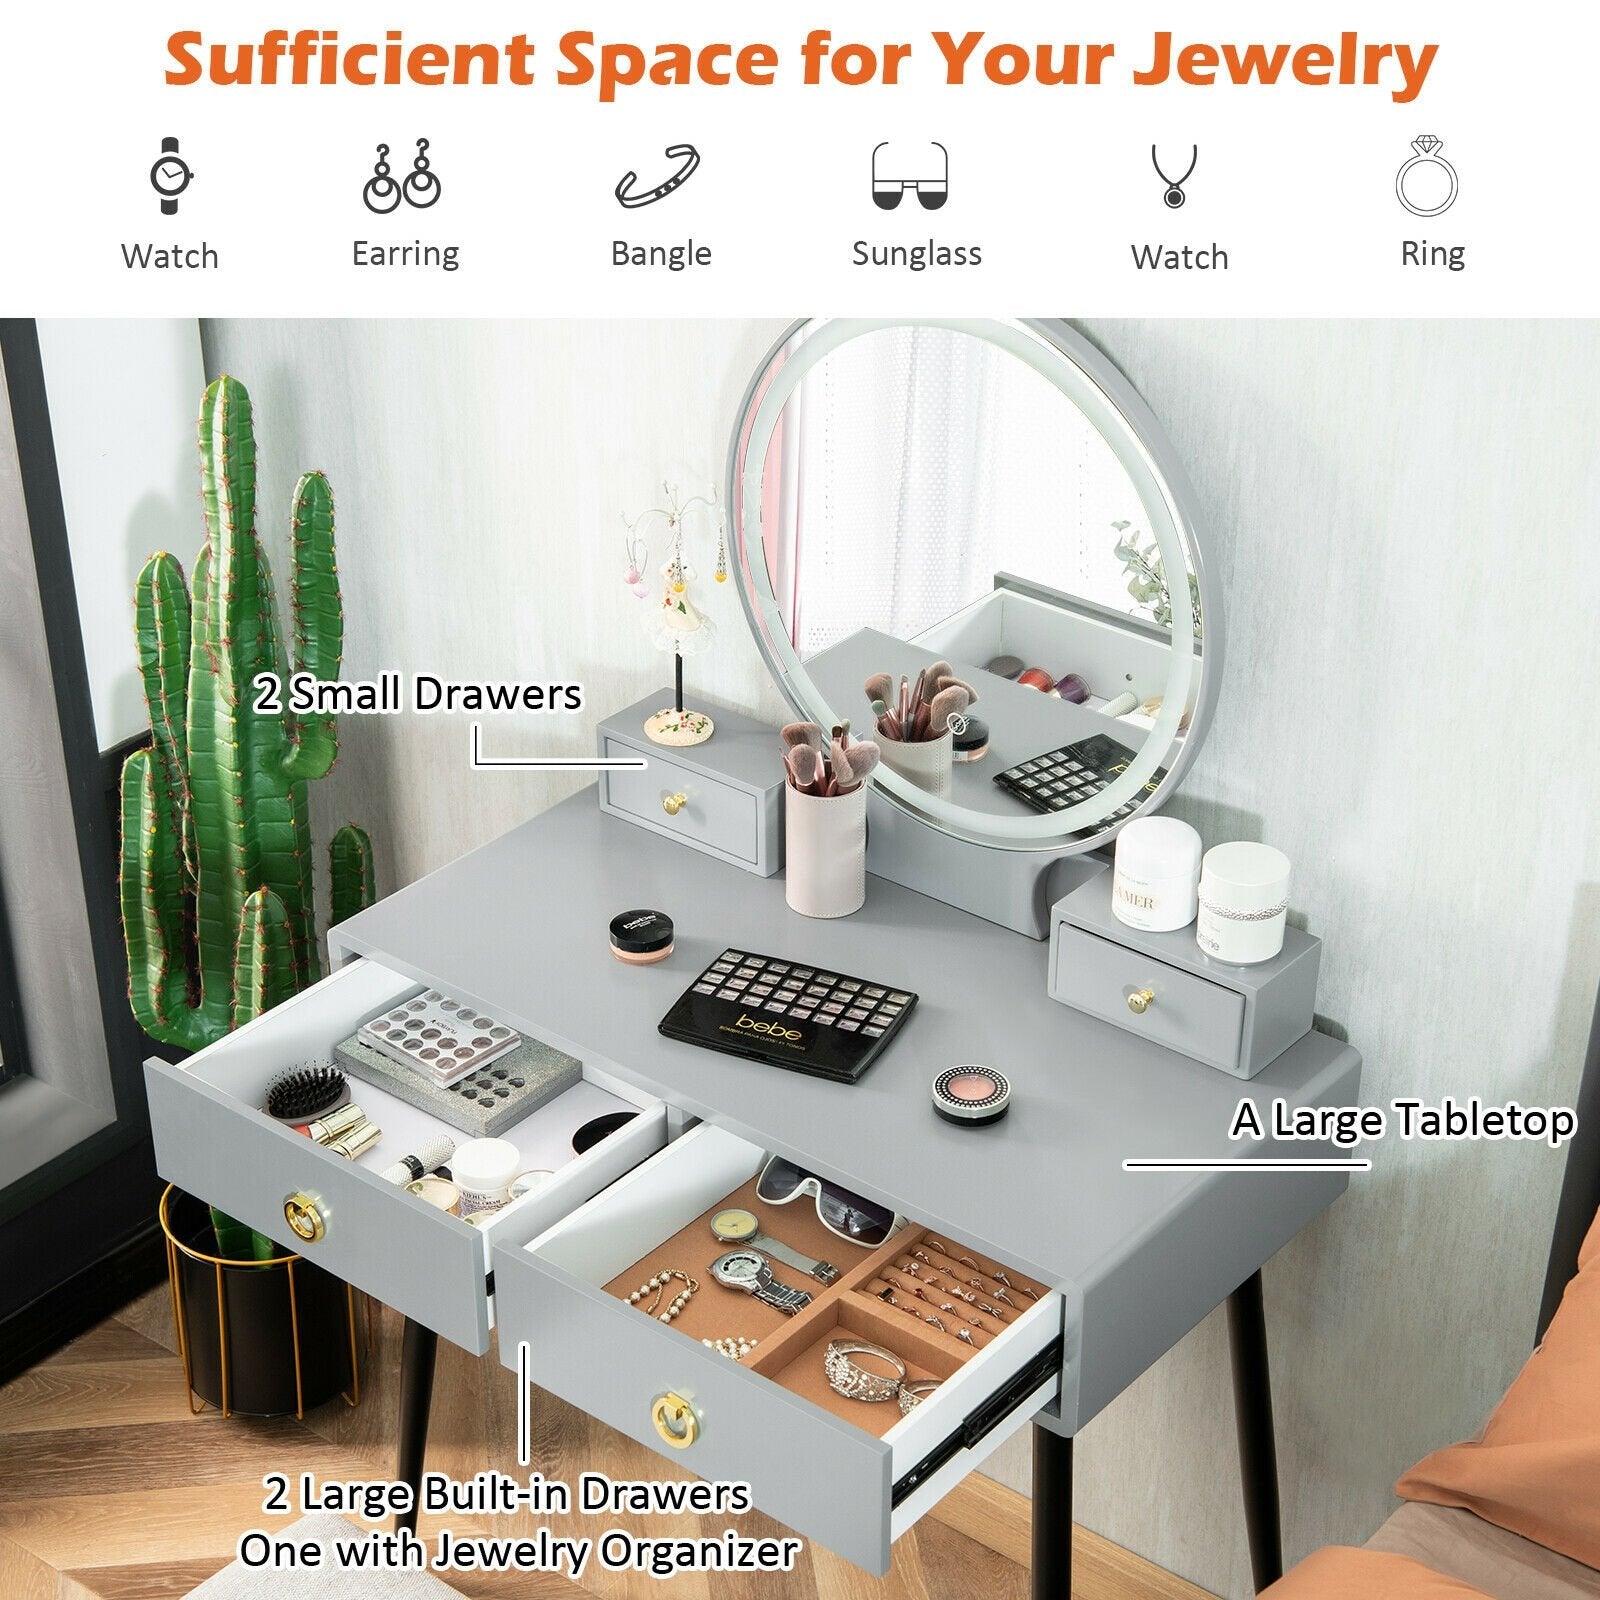 Vanity Table Set with Mirror, Gray - Gallery Canada